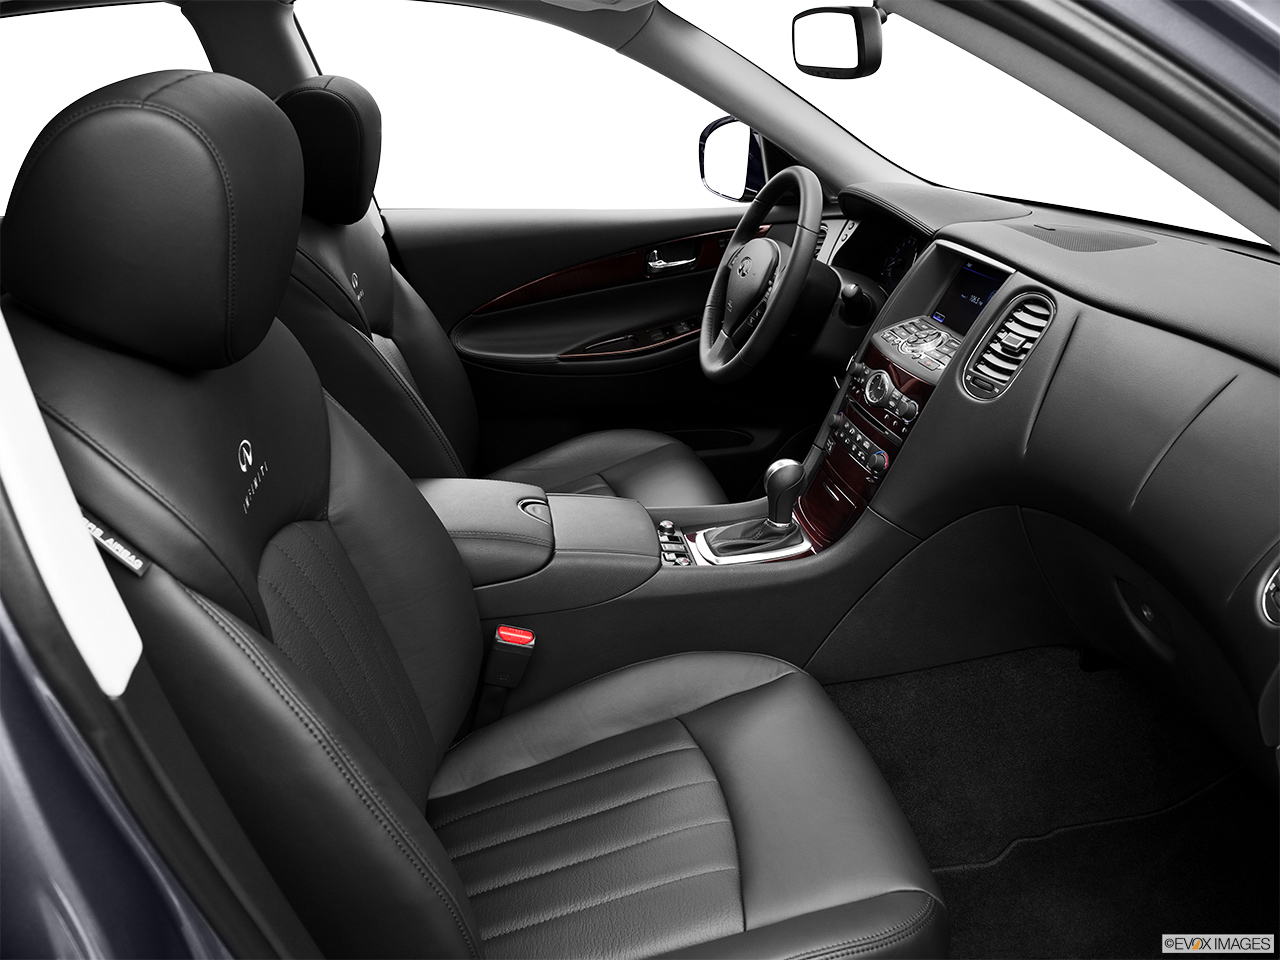 2013 Infiniti EX EX37 Journey AWD Passenger seat. 